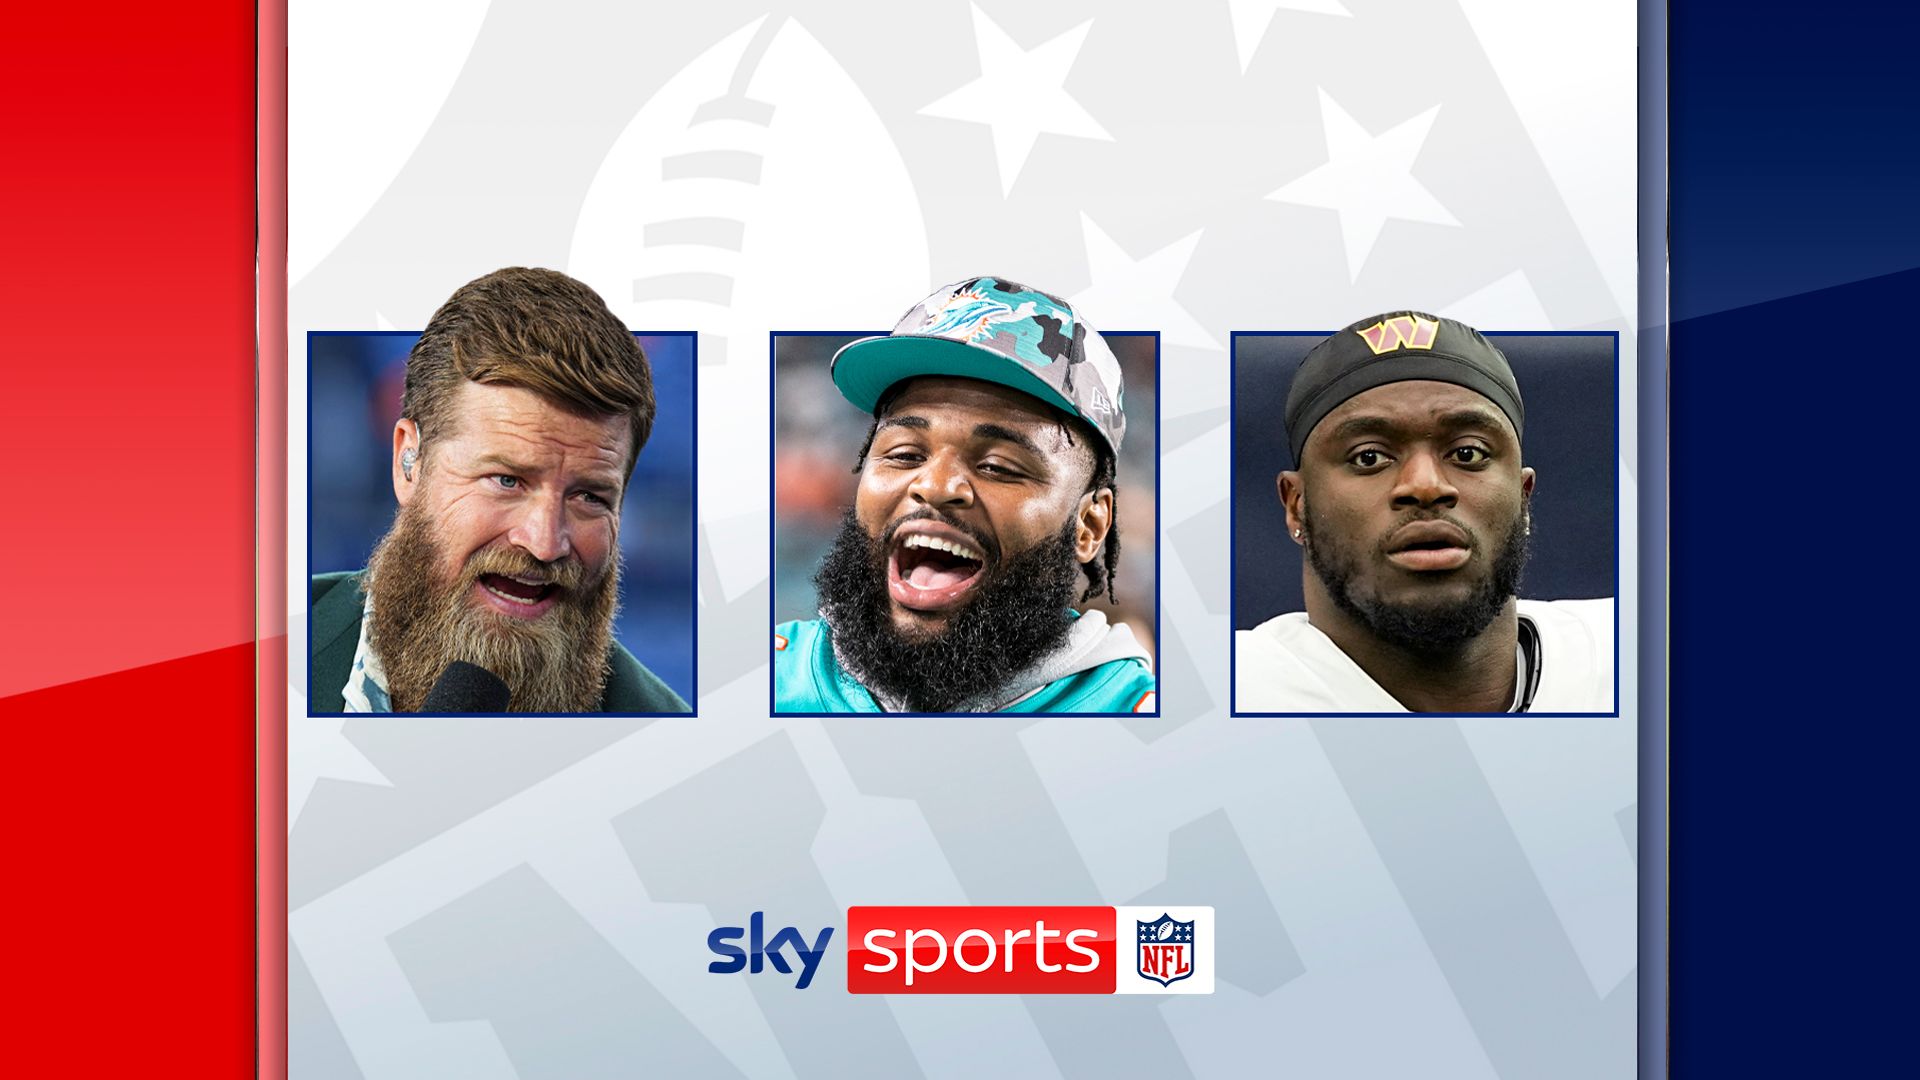 Fitzpatrick, Wilkins, Obada: Sky Sports' star-studded Super Bowl line-up